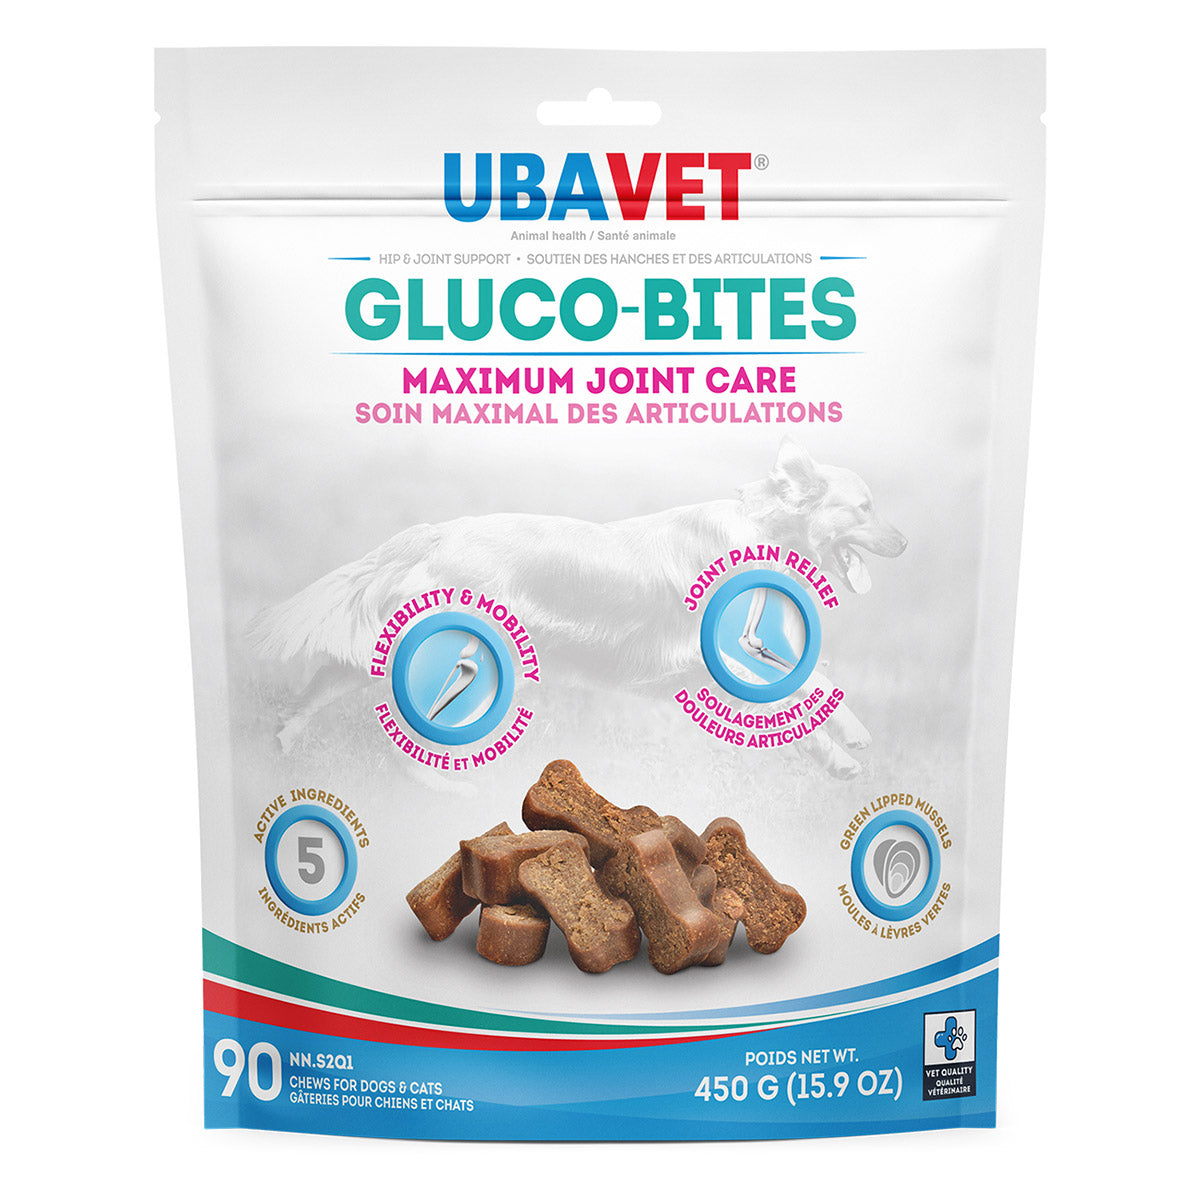 Ubavet Gluco-Bites Maximum Joint Care Soft Chews Canine